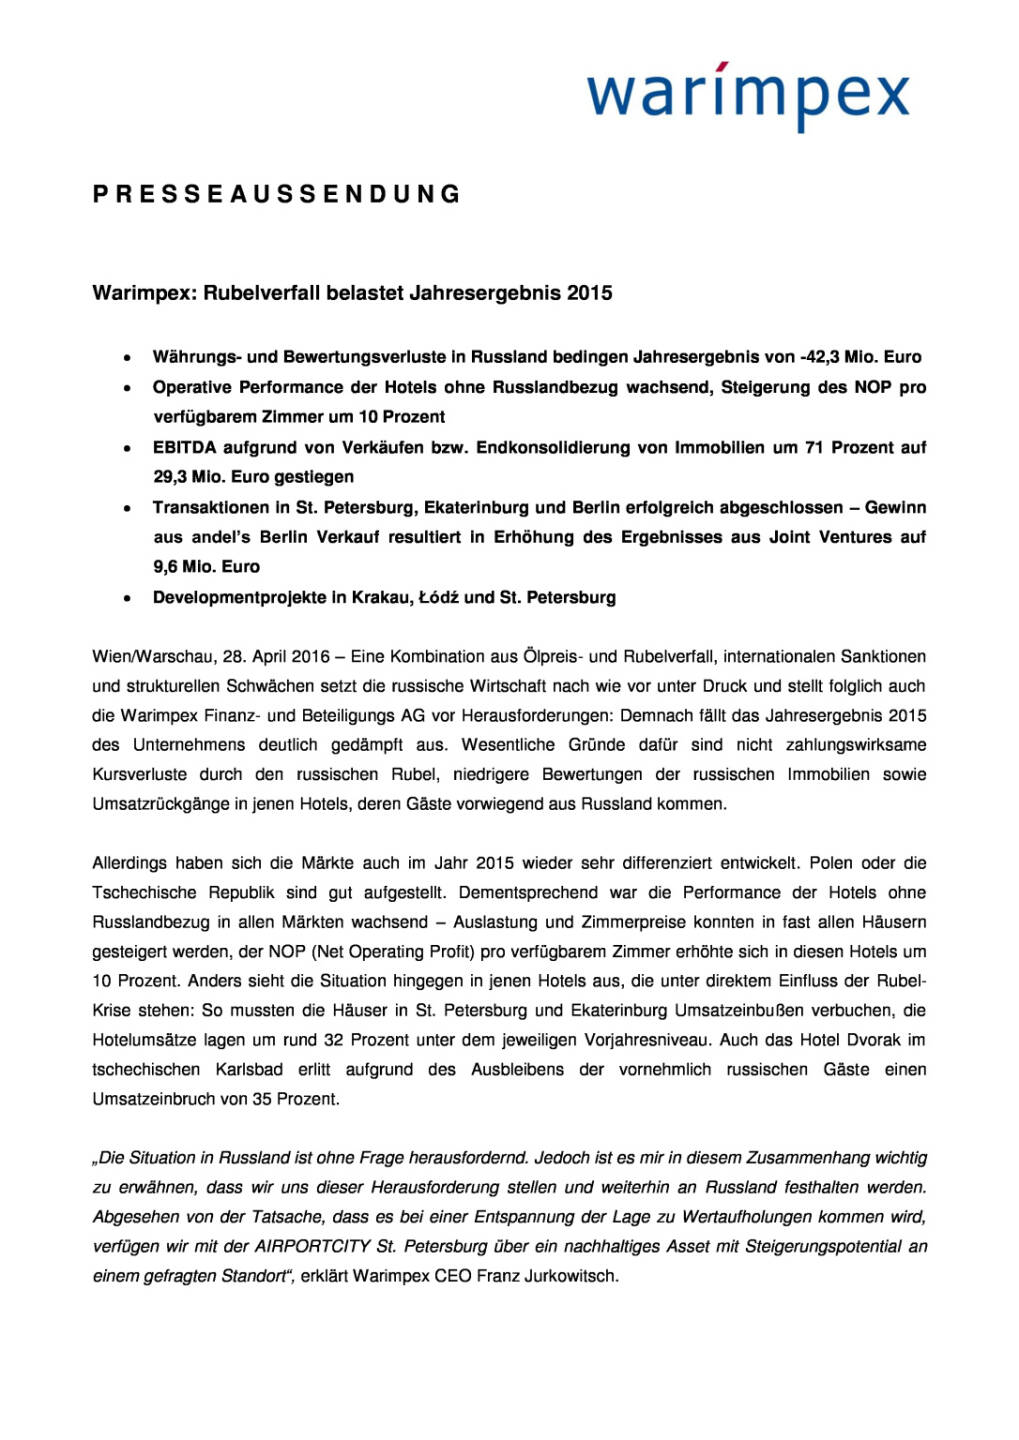 Warimpex: Rubelverfall belastet Jahresergebnis 2015, Seite 1/5, komplettes Dokument unter http://boerse-social.com/static/uploads/file_963_warimpex_rubelverfall_belastet_jahresergebnis_2015.pdf